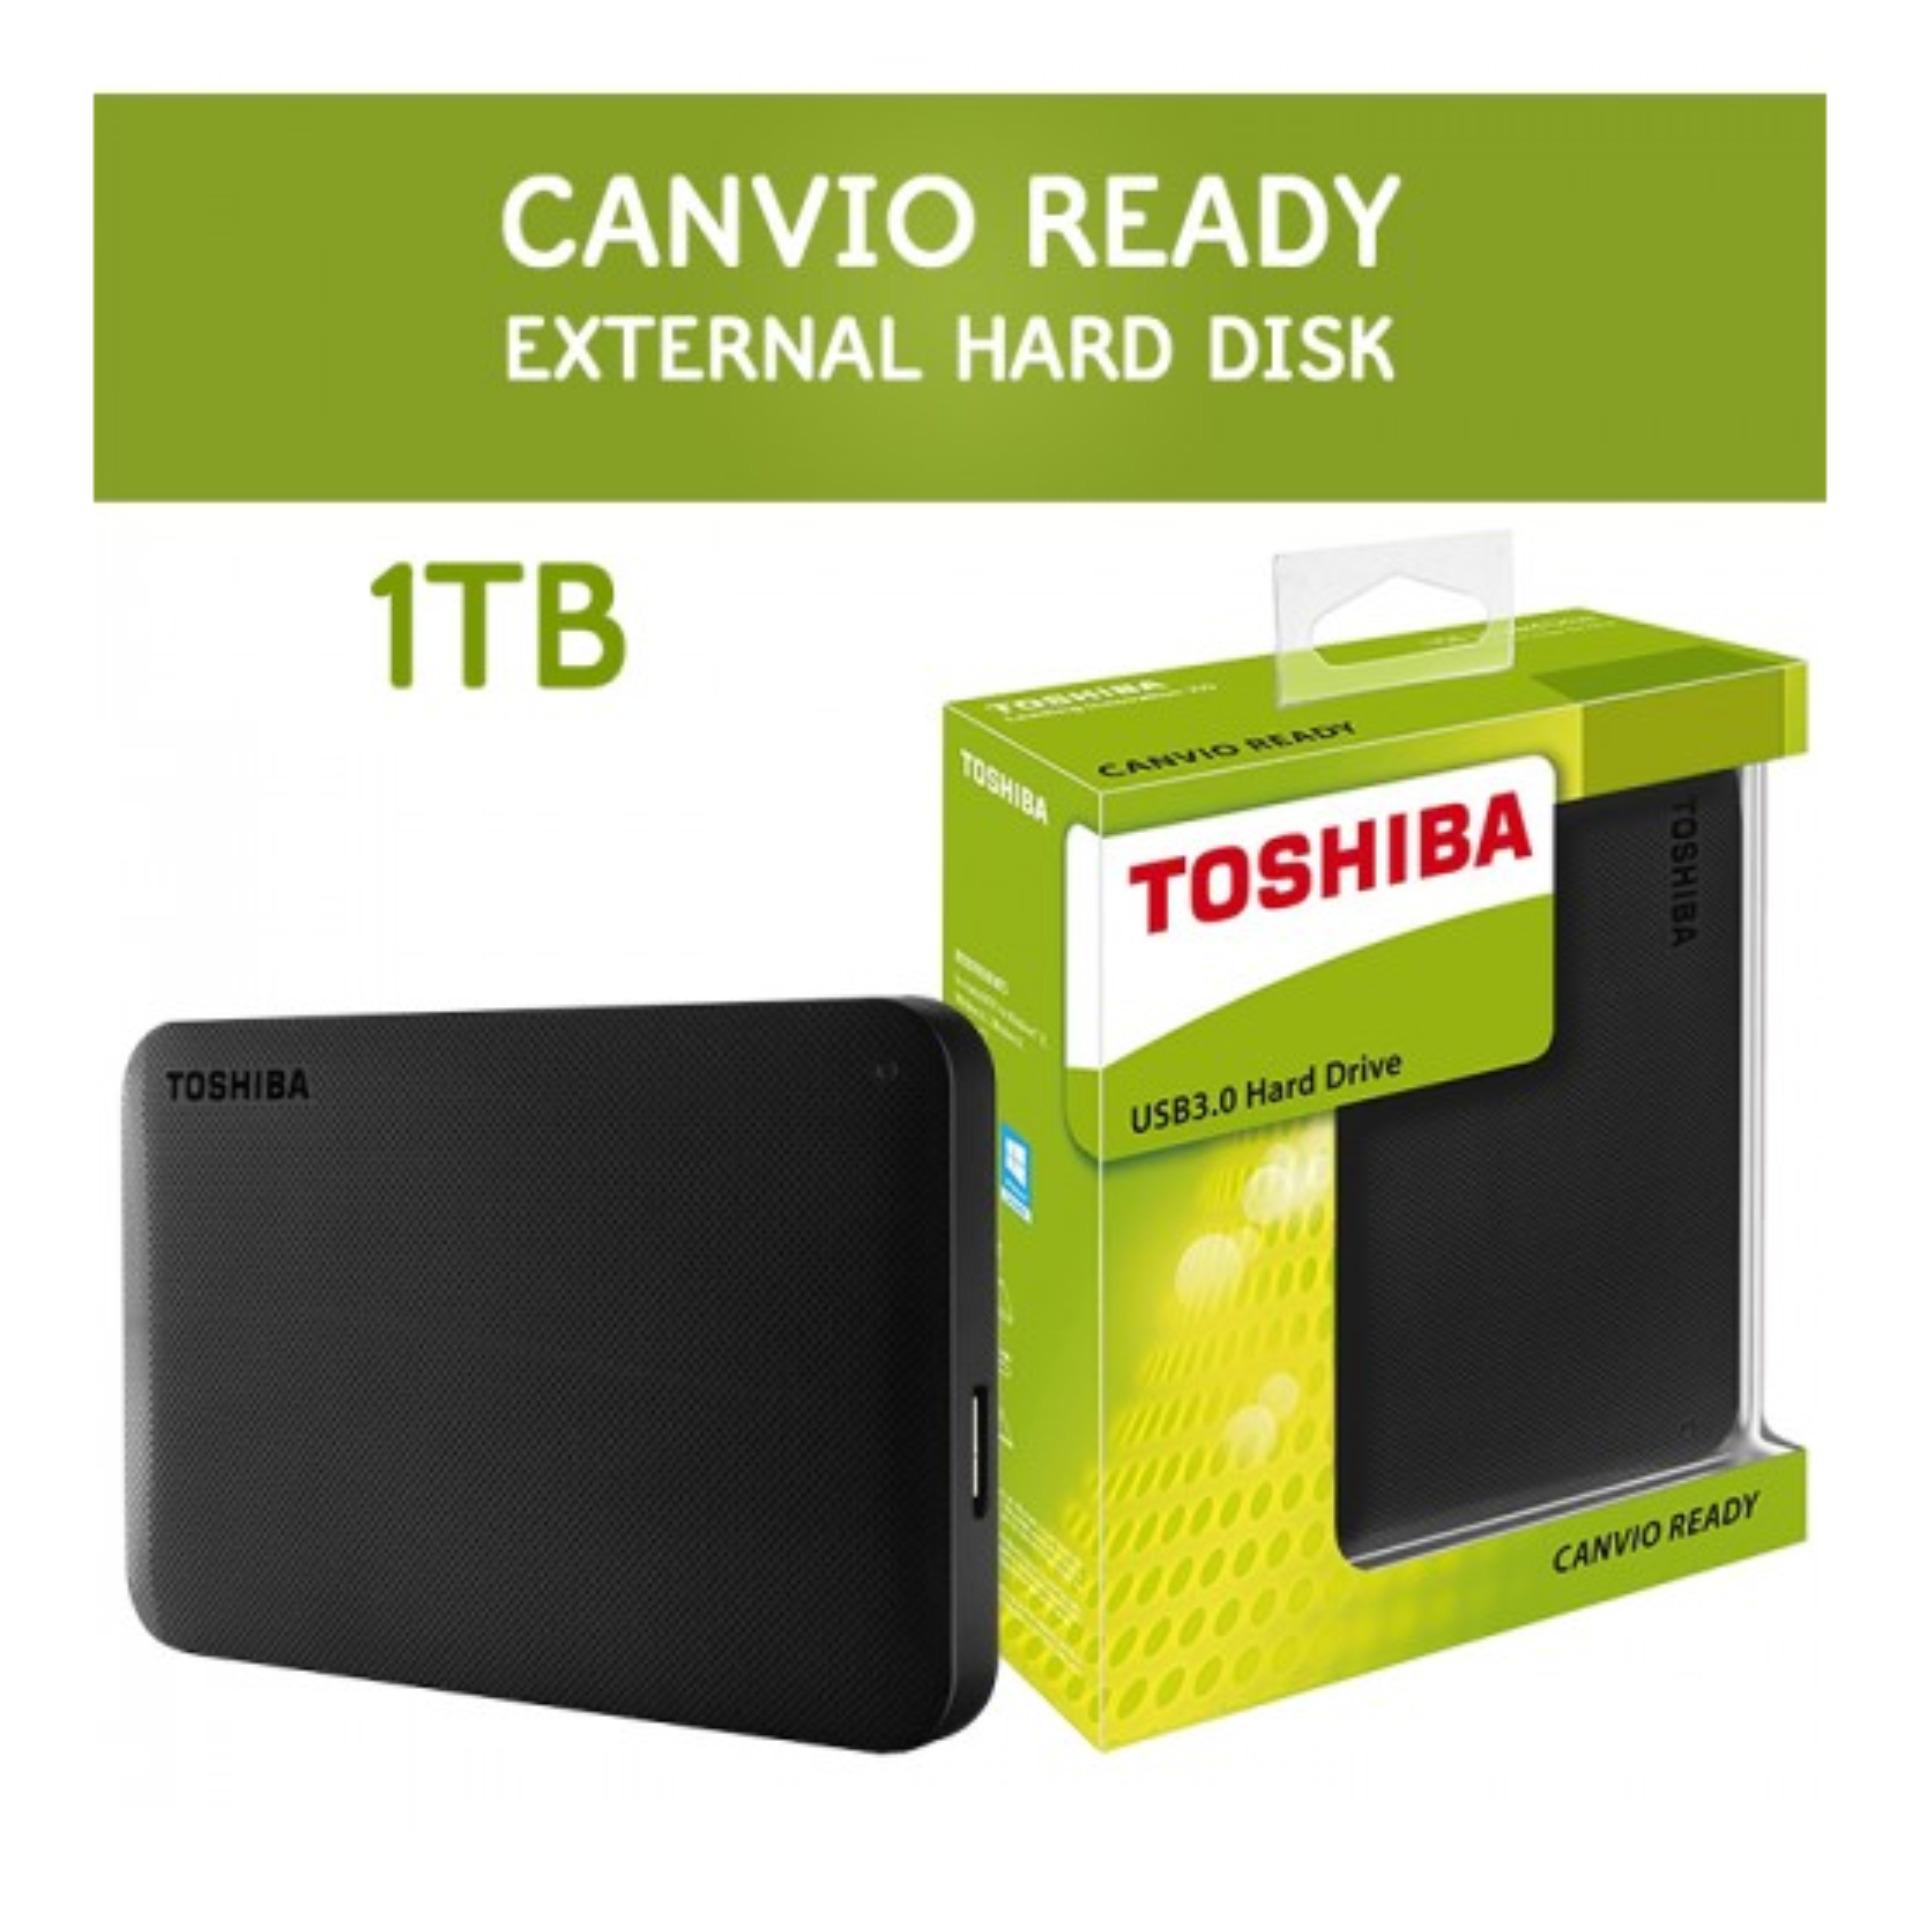 toshiba external hard drive drivers for mac